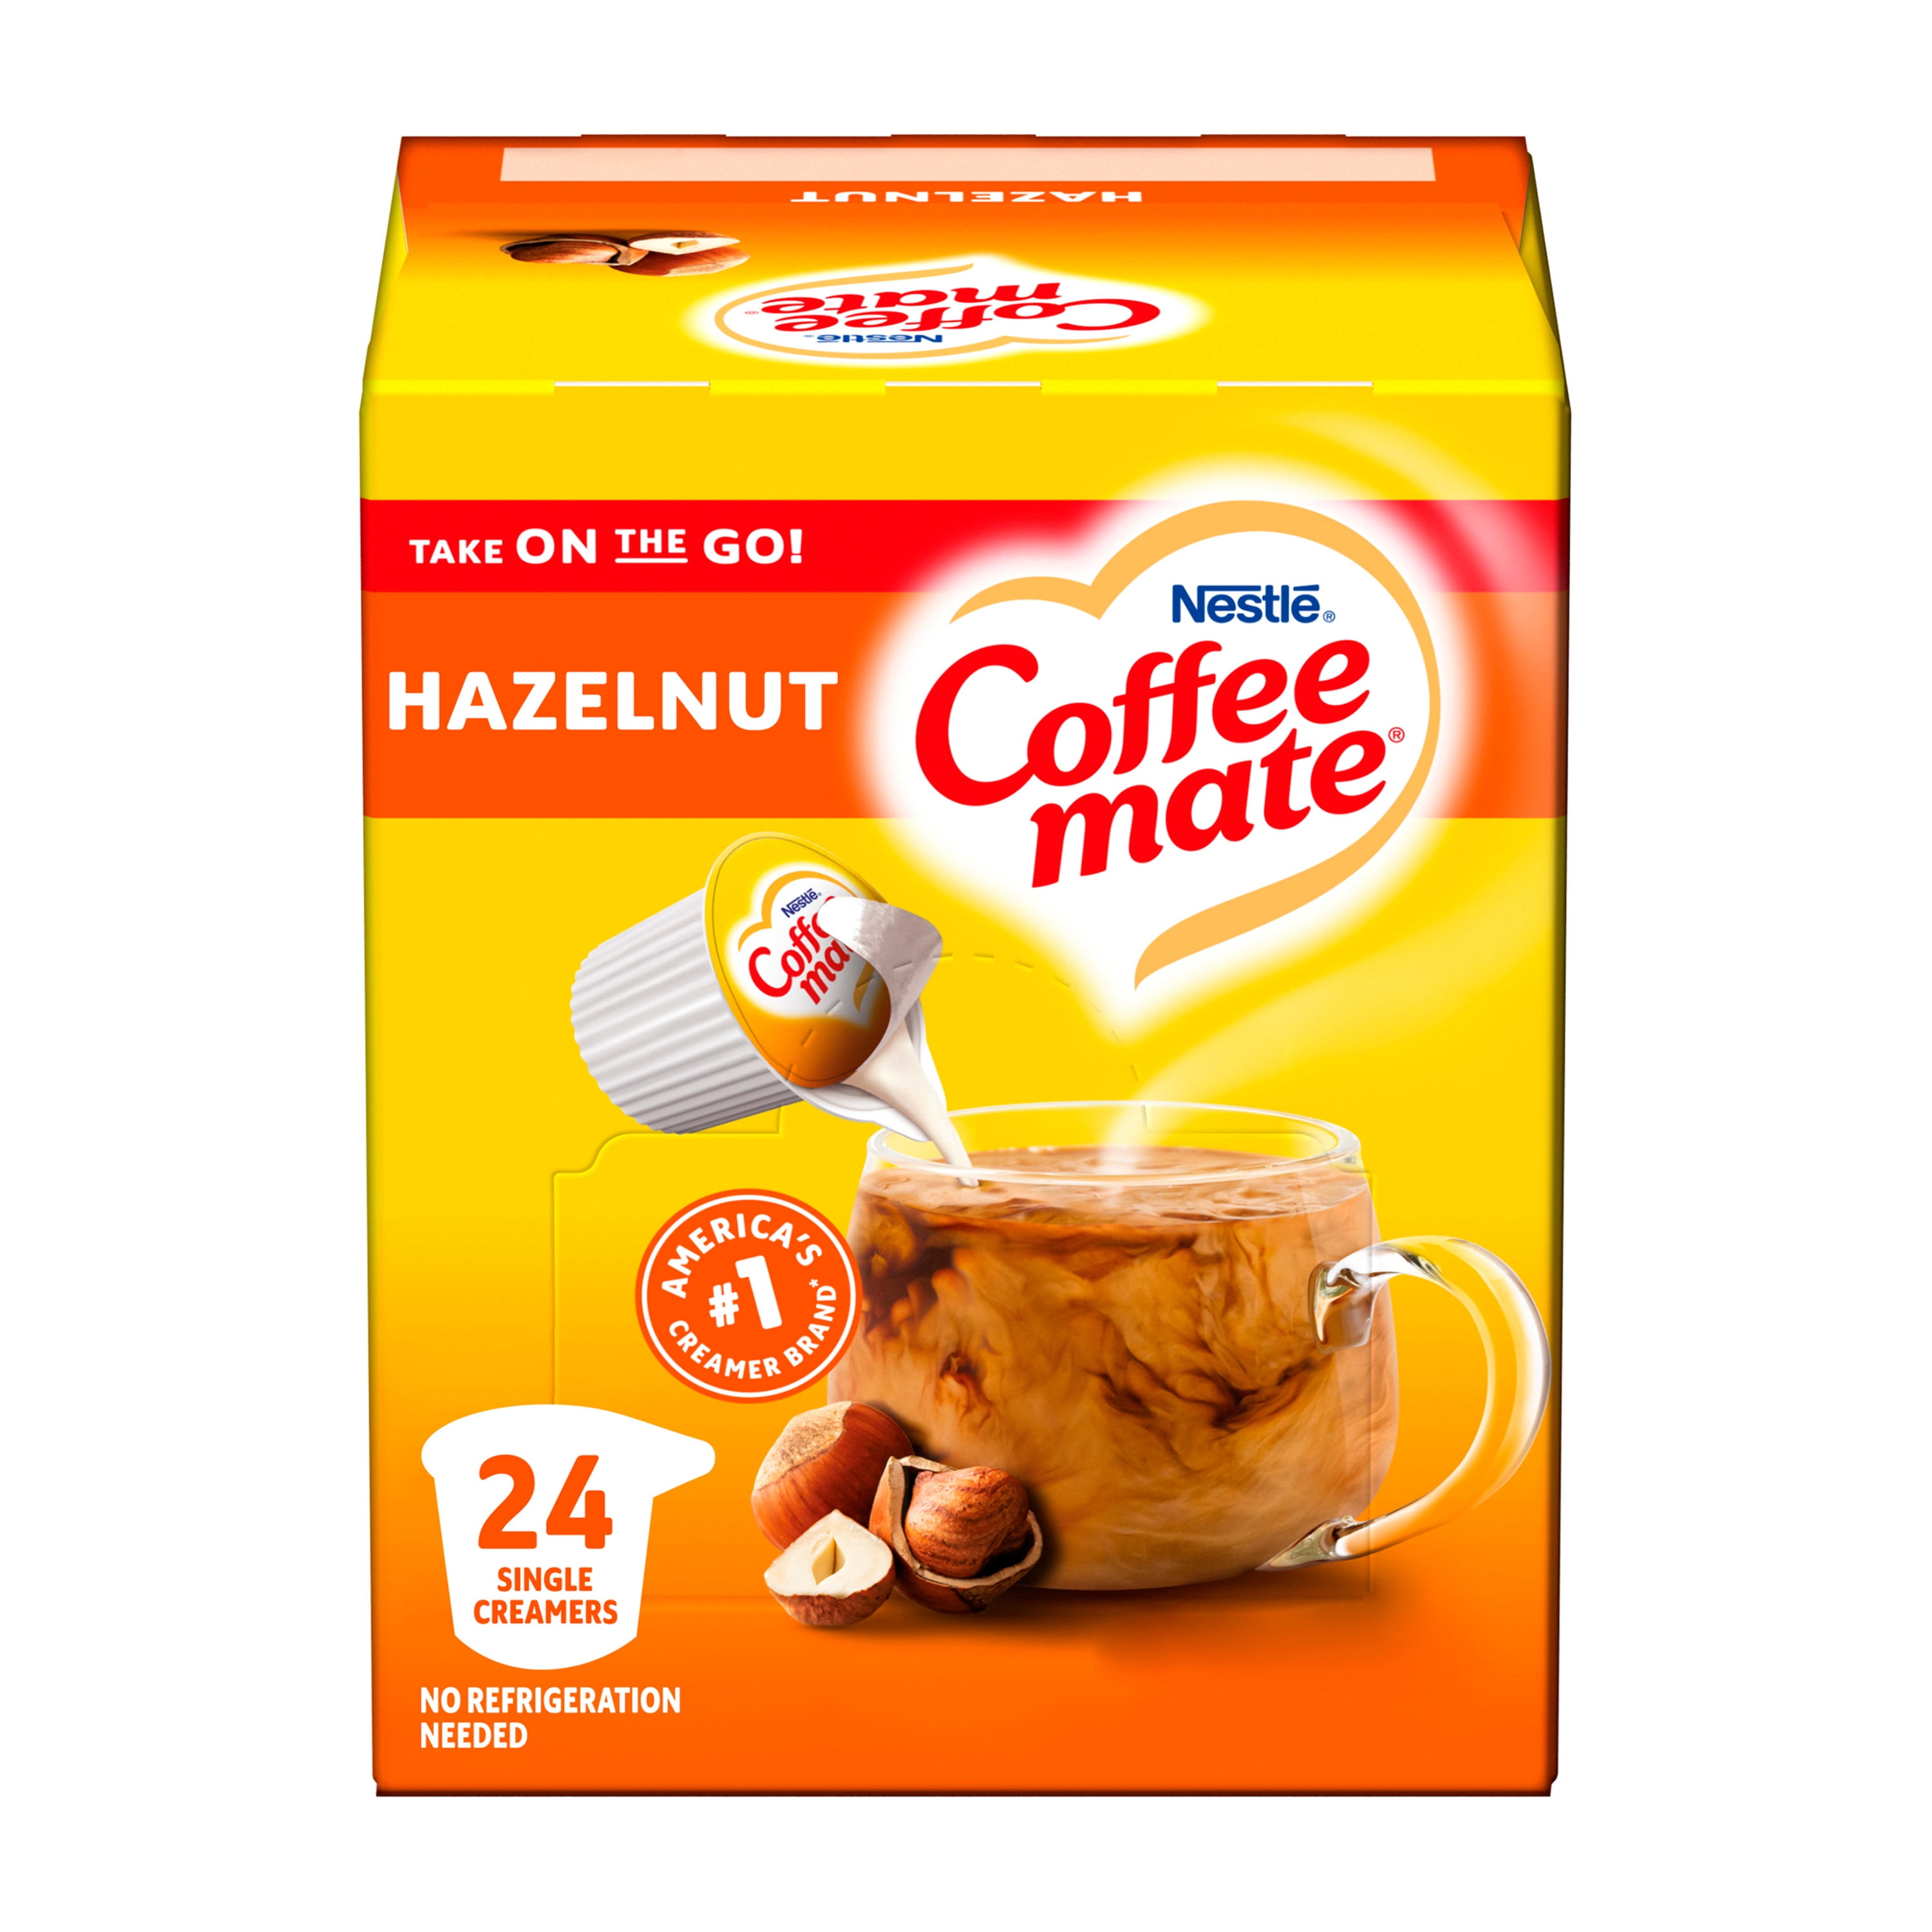 Nestlé Coffee Brands